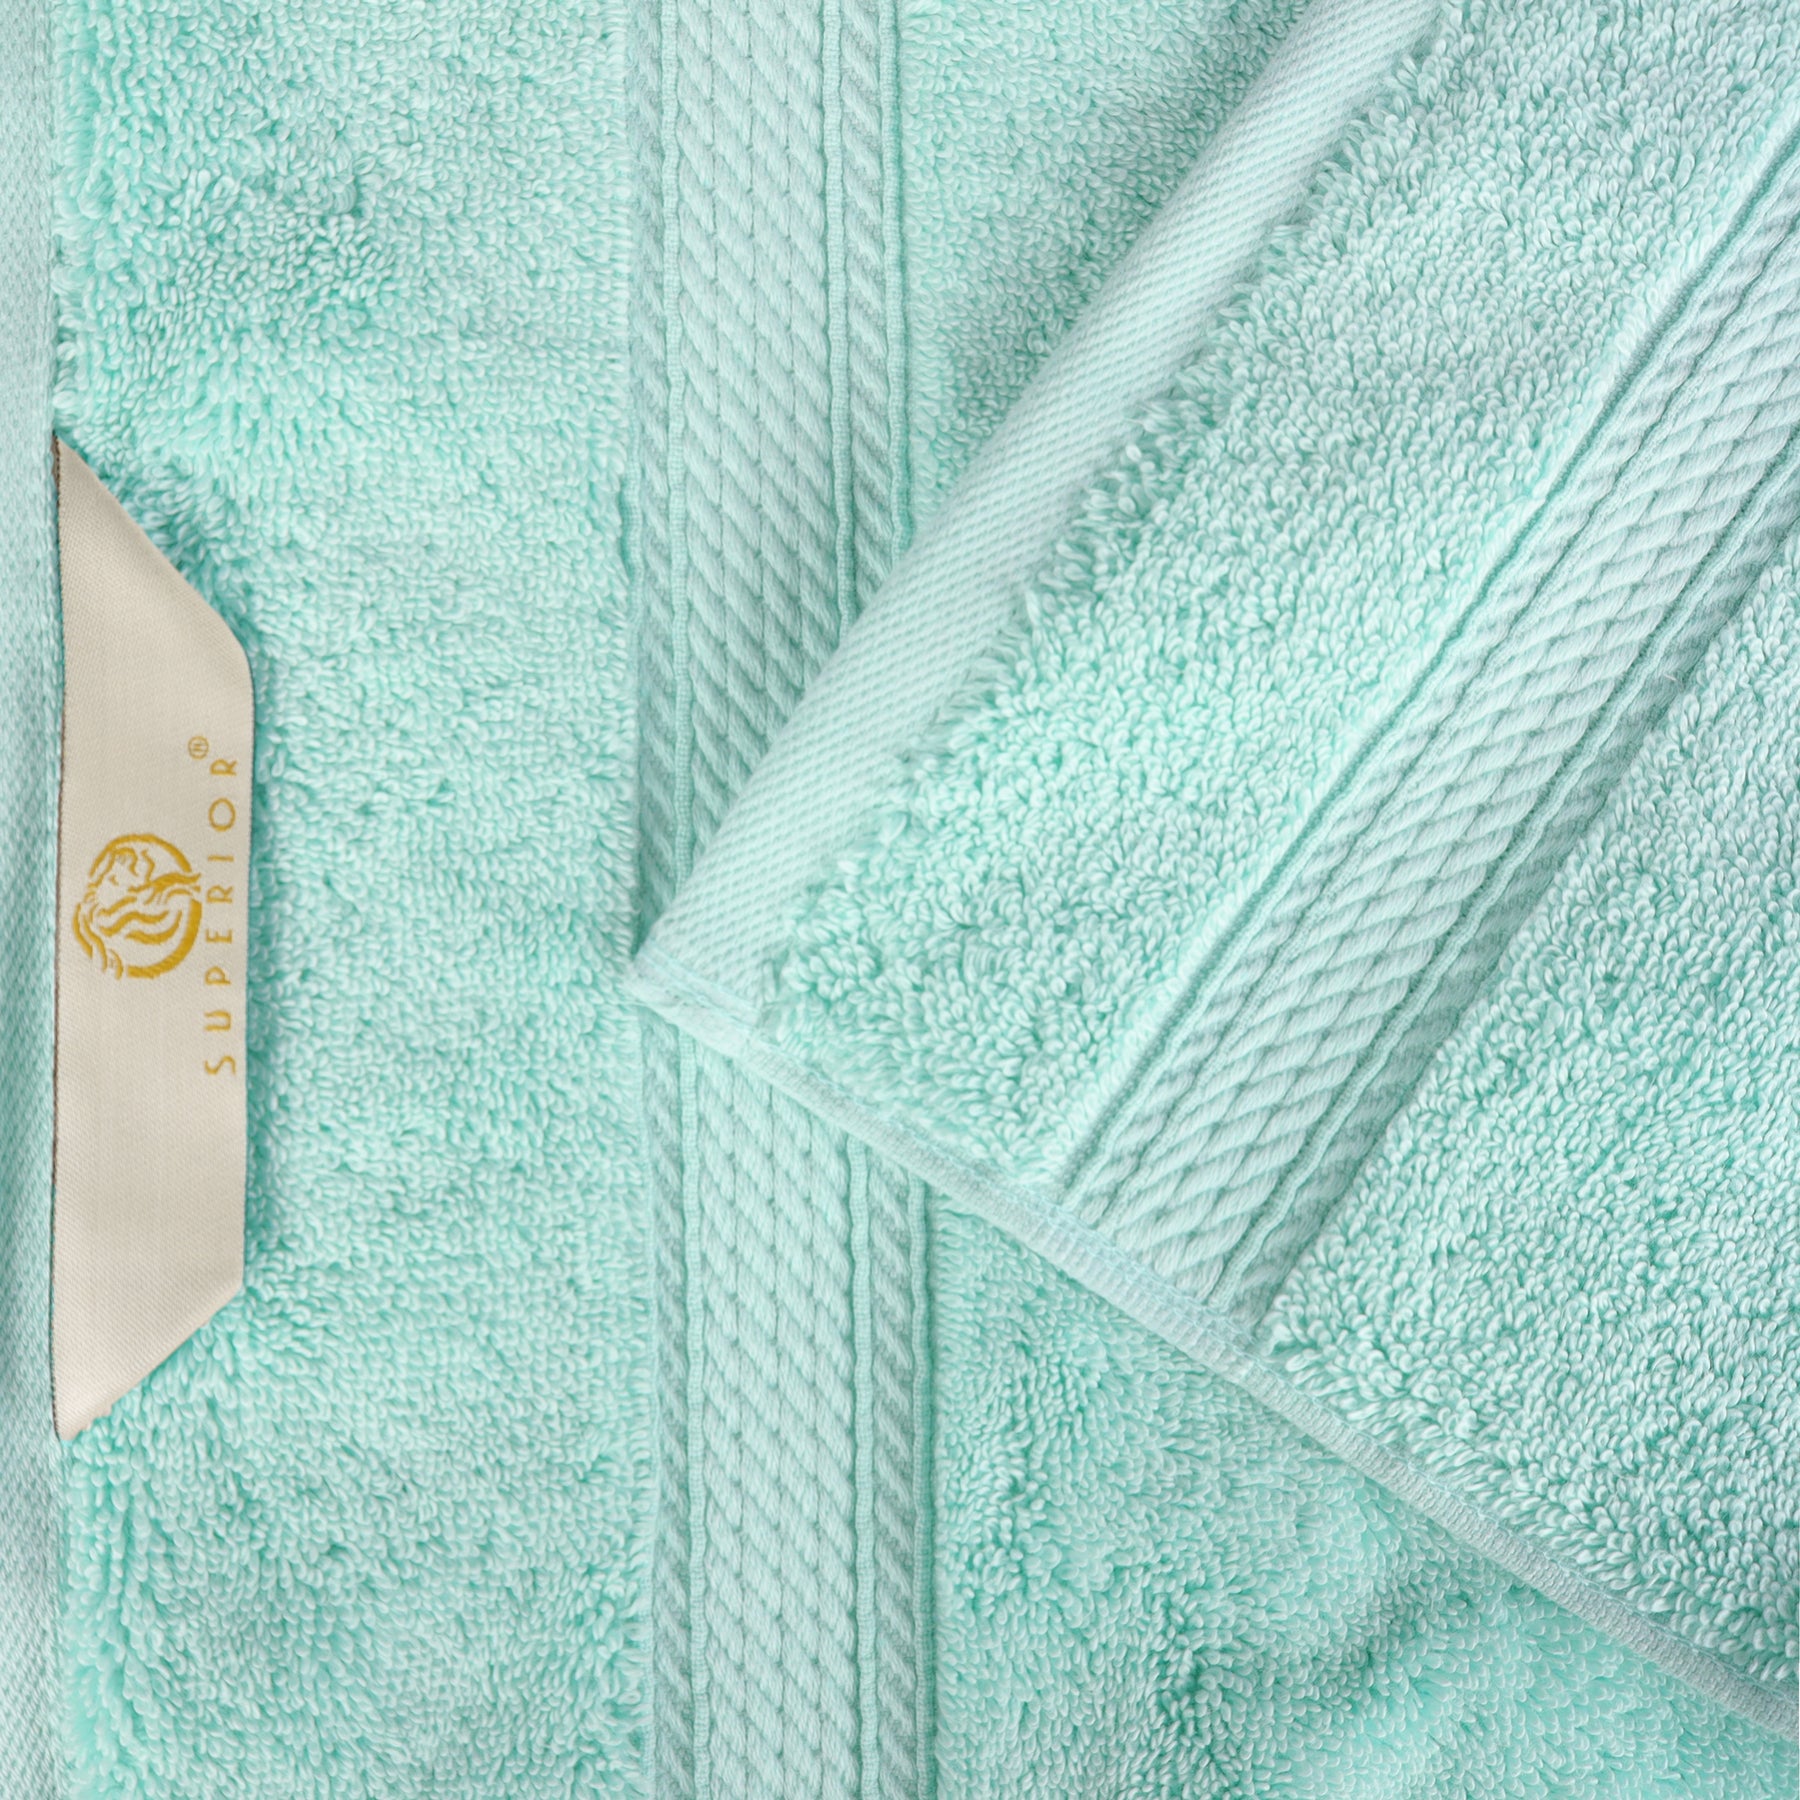 Egyptian Cotton Highly Absorbent 2 Piece Ultra-Plush Solid Bath Sheet Set - Sea Foam